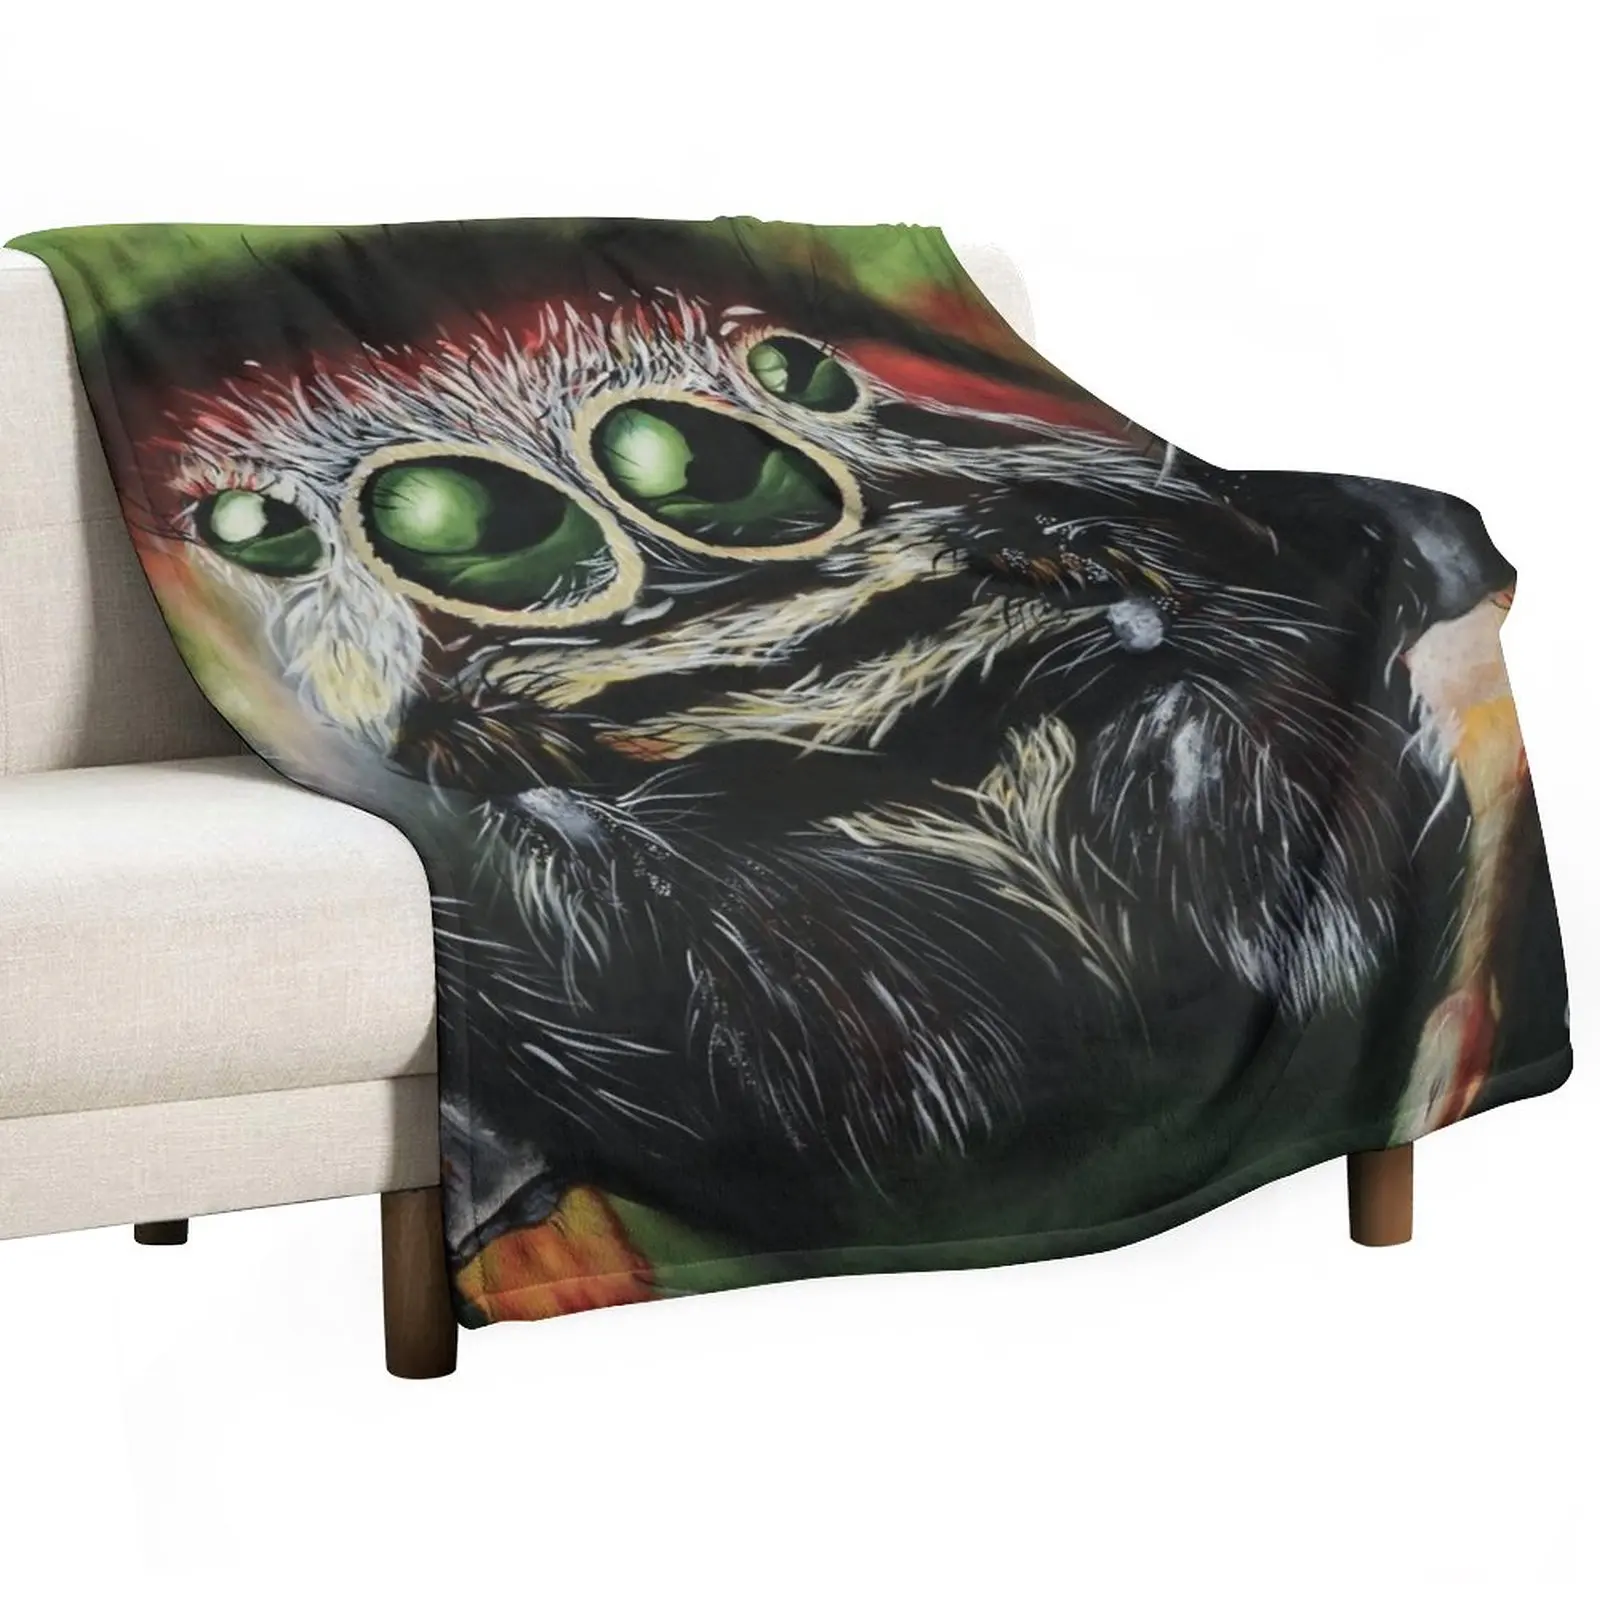 

Arachne Throw Blanket Hairy Blankets Sofa Throw Blanket Decorative Sofa Blankets sofa bed